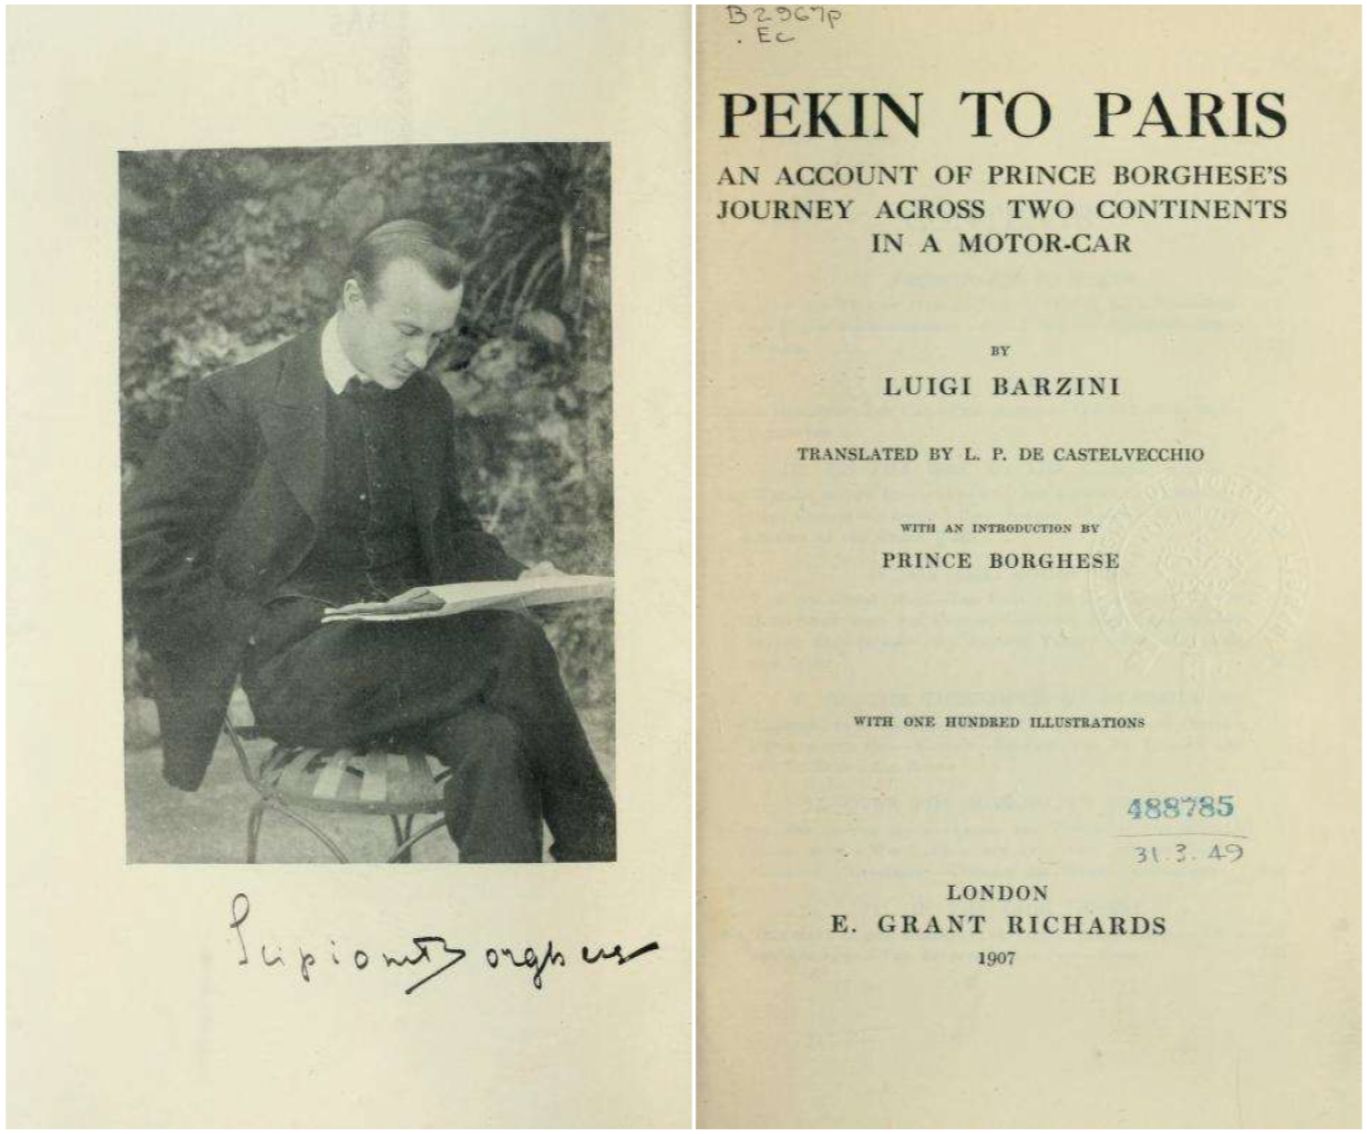 Фронтиспис книги Л. Барзини об участии принца Боргезе в автопробеге Пекин-Париж